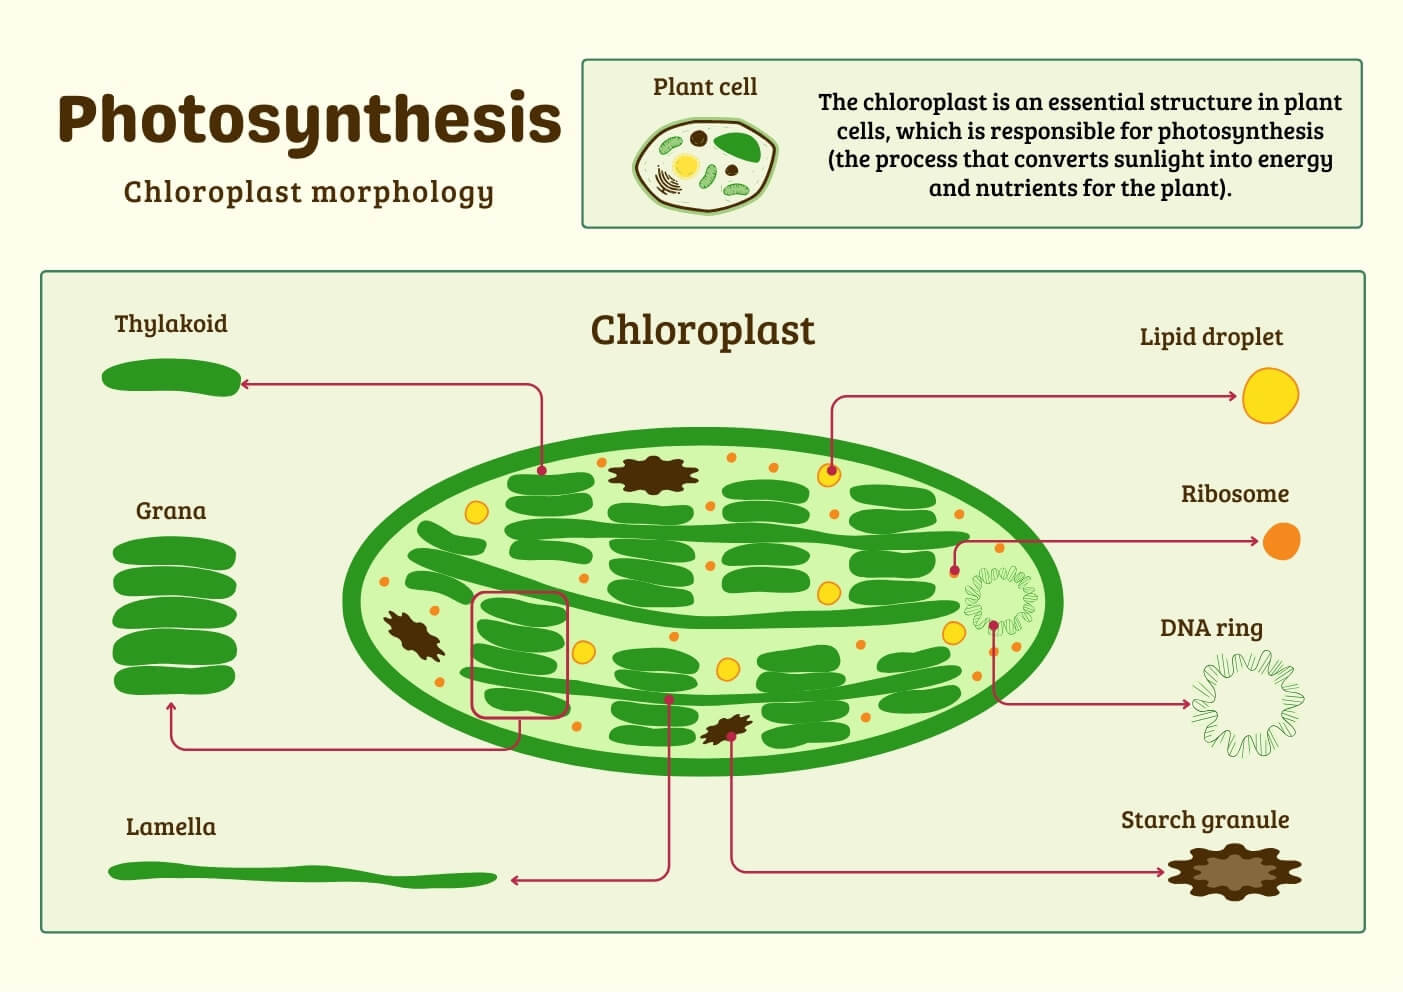 Chloroplast morphology